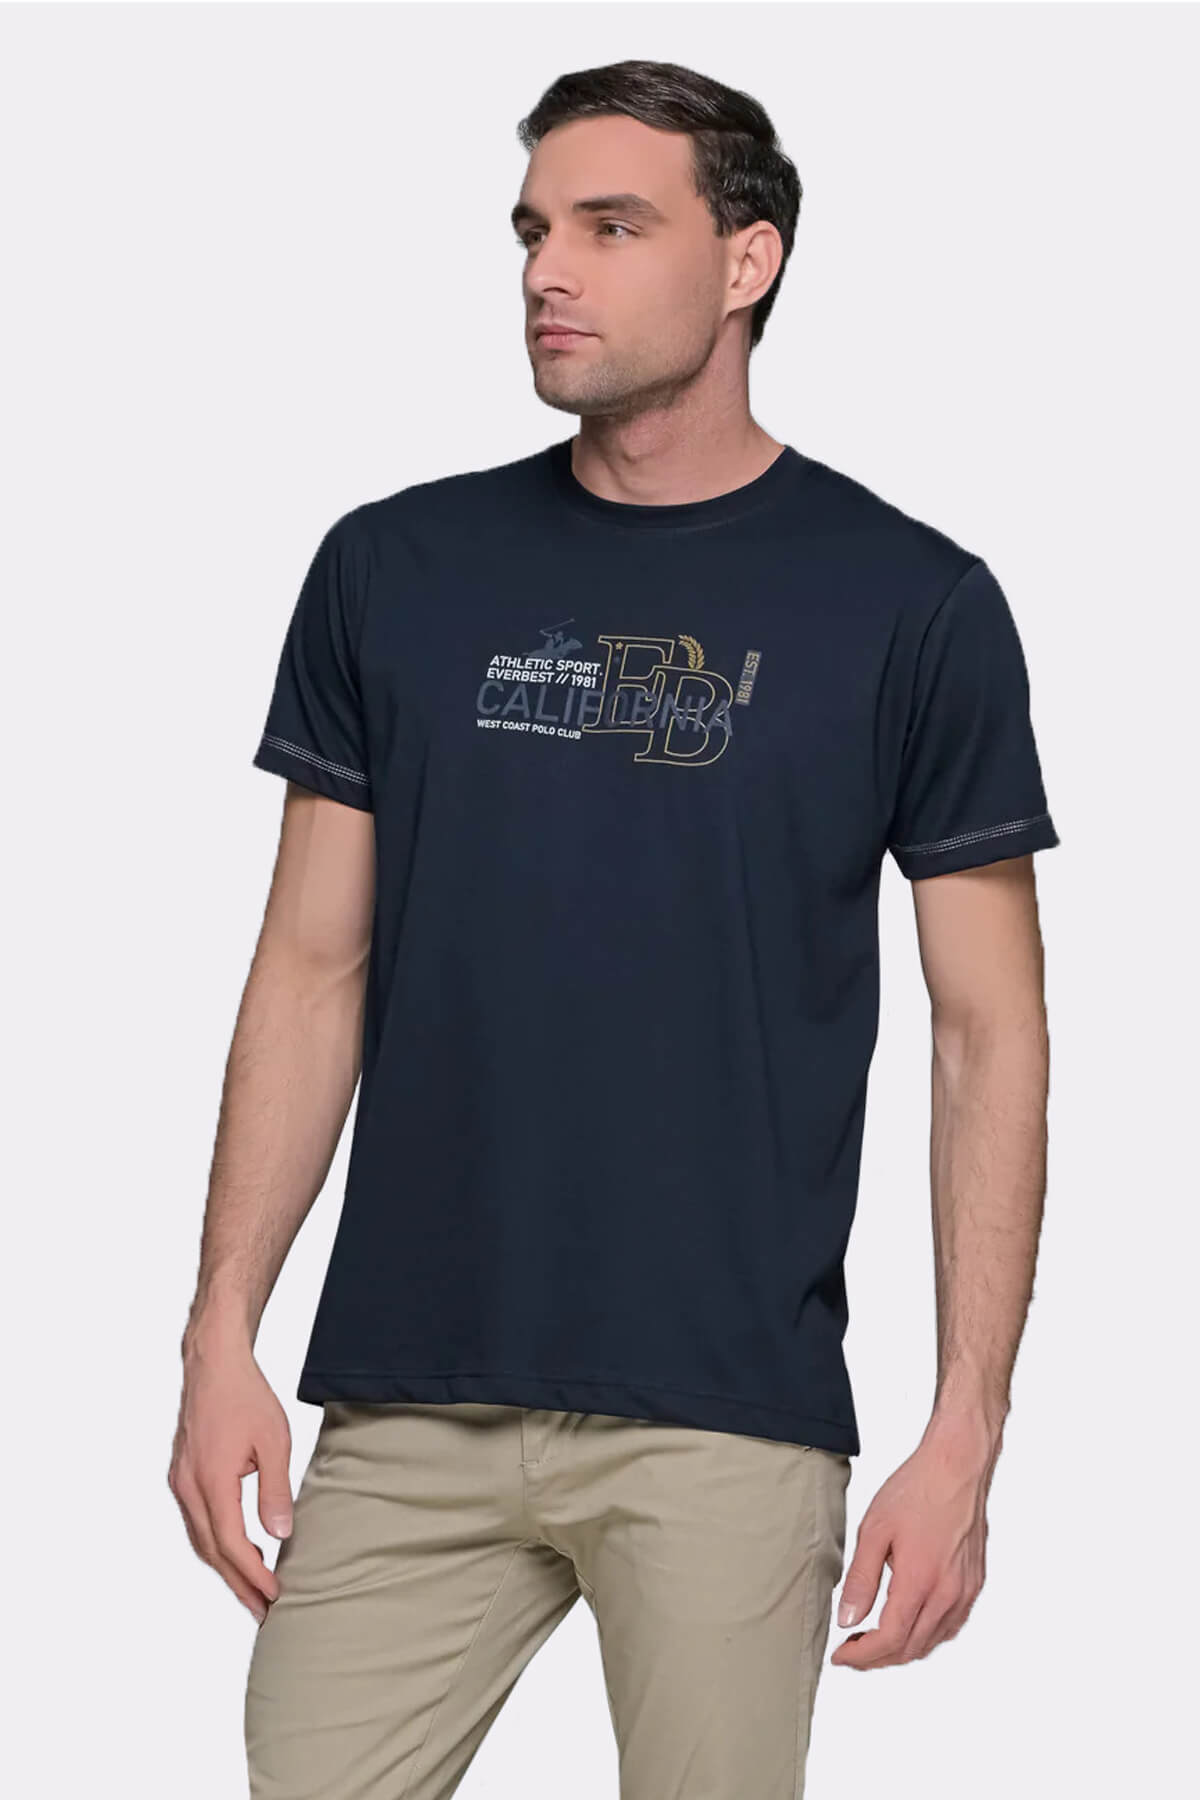 Everbest California Logo Printed T-Shirt